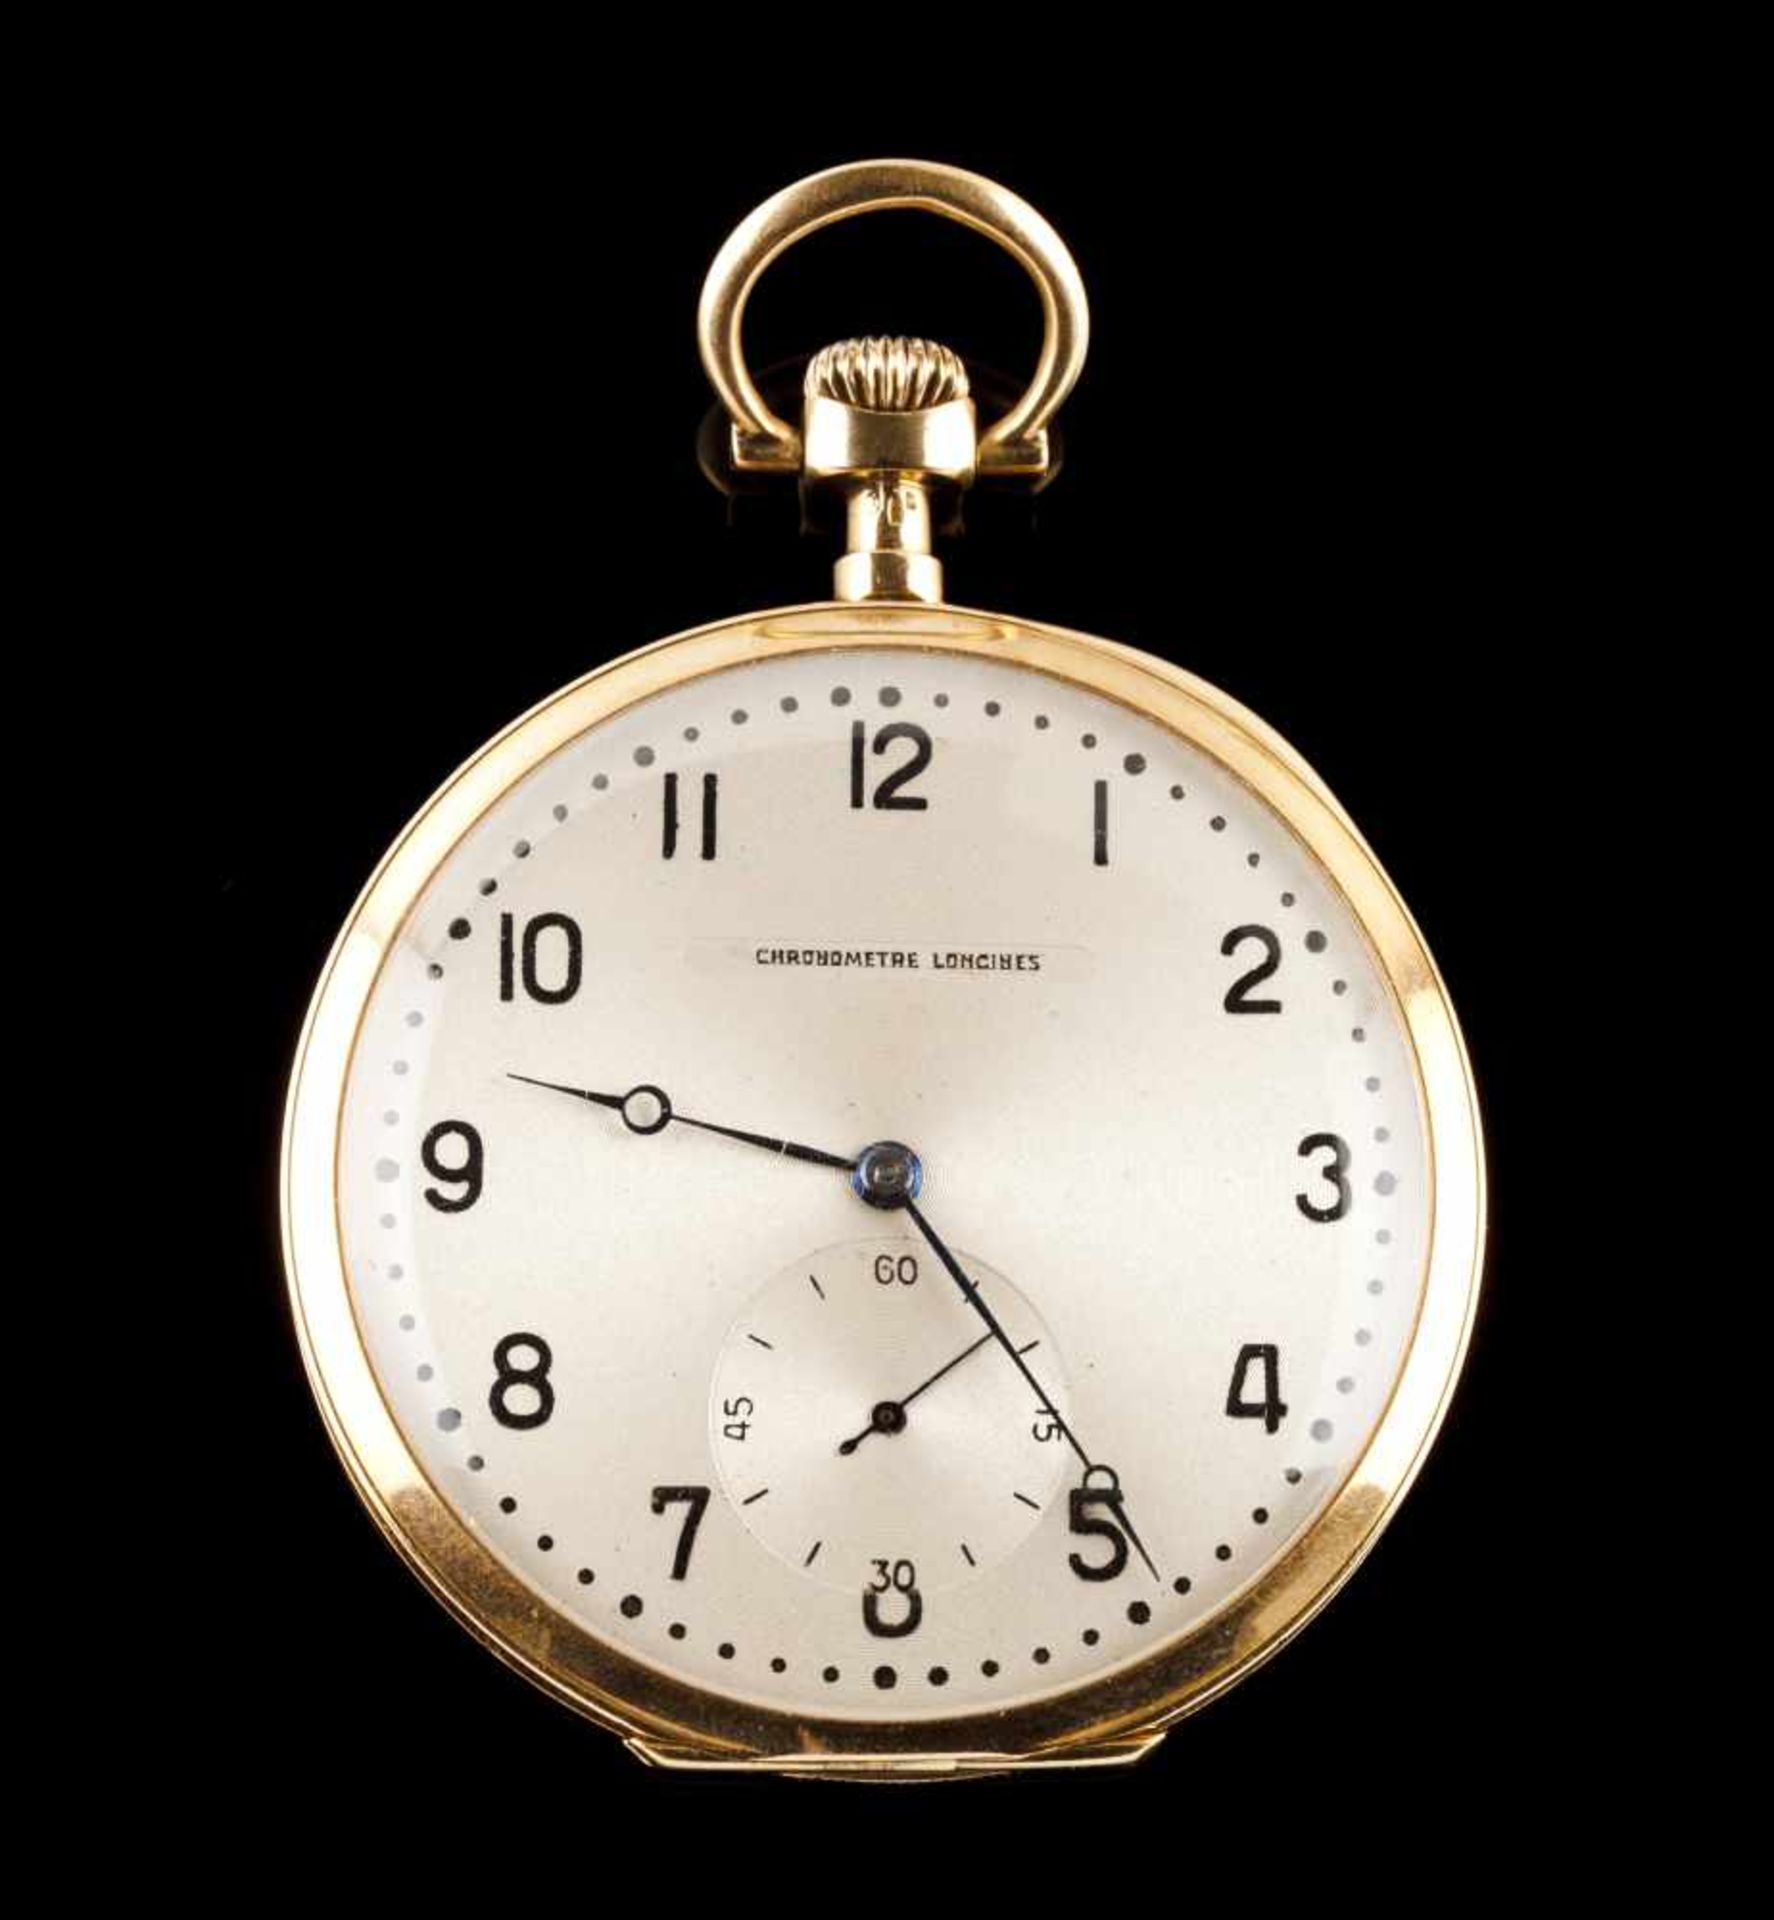 A Longines Chronometres pocket watch